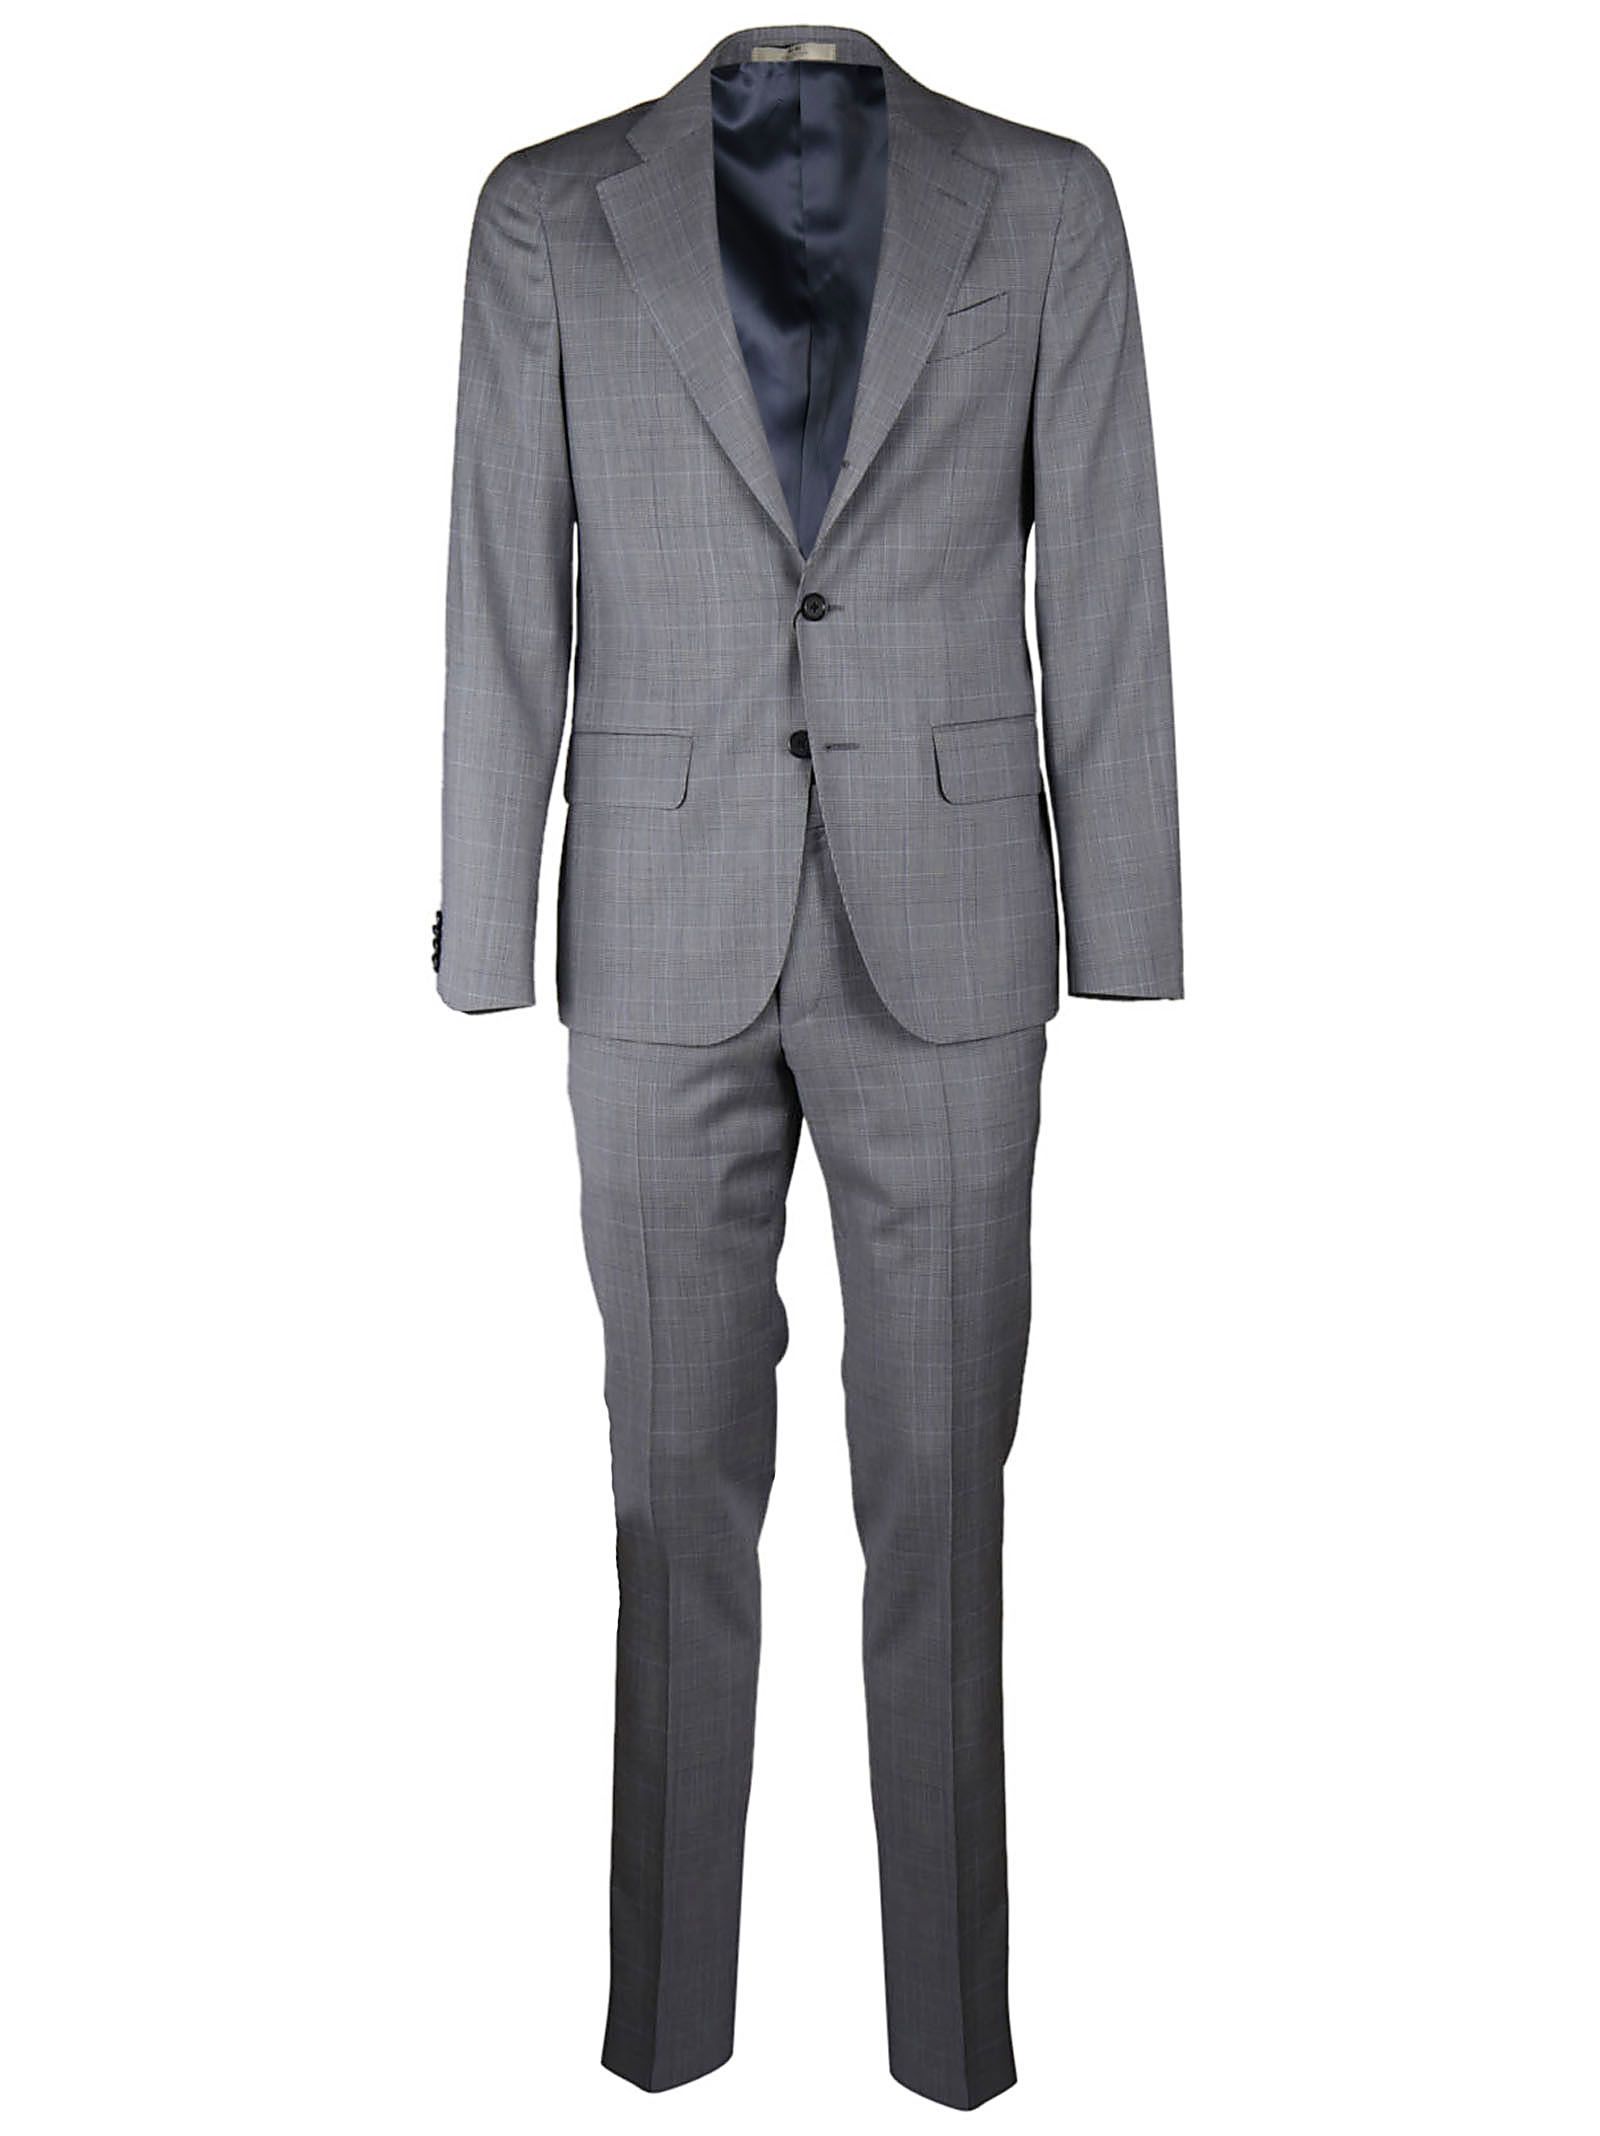 Corneliani - Corneliani Checked Suit - Gray, Men's Suits | Italist